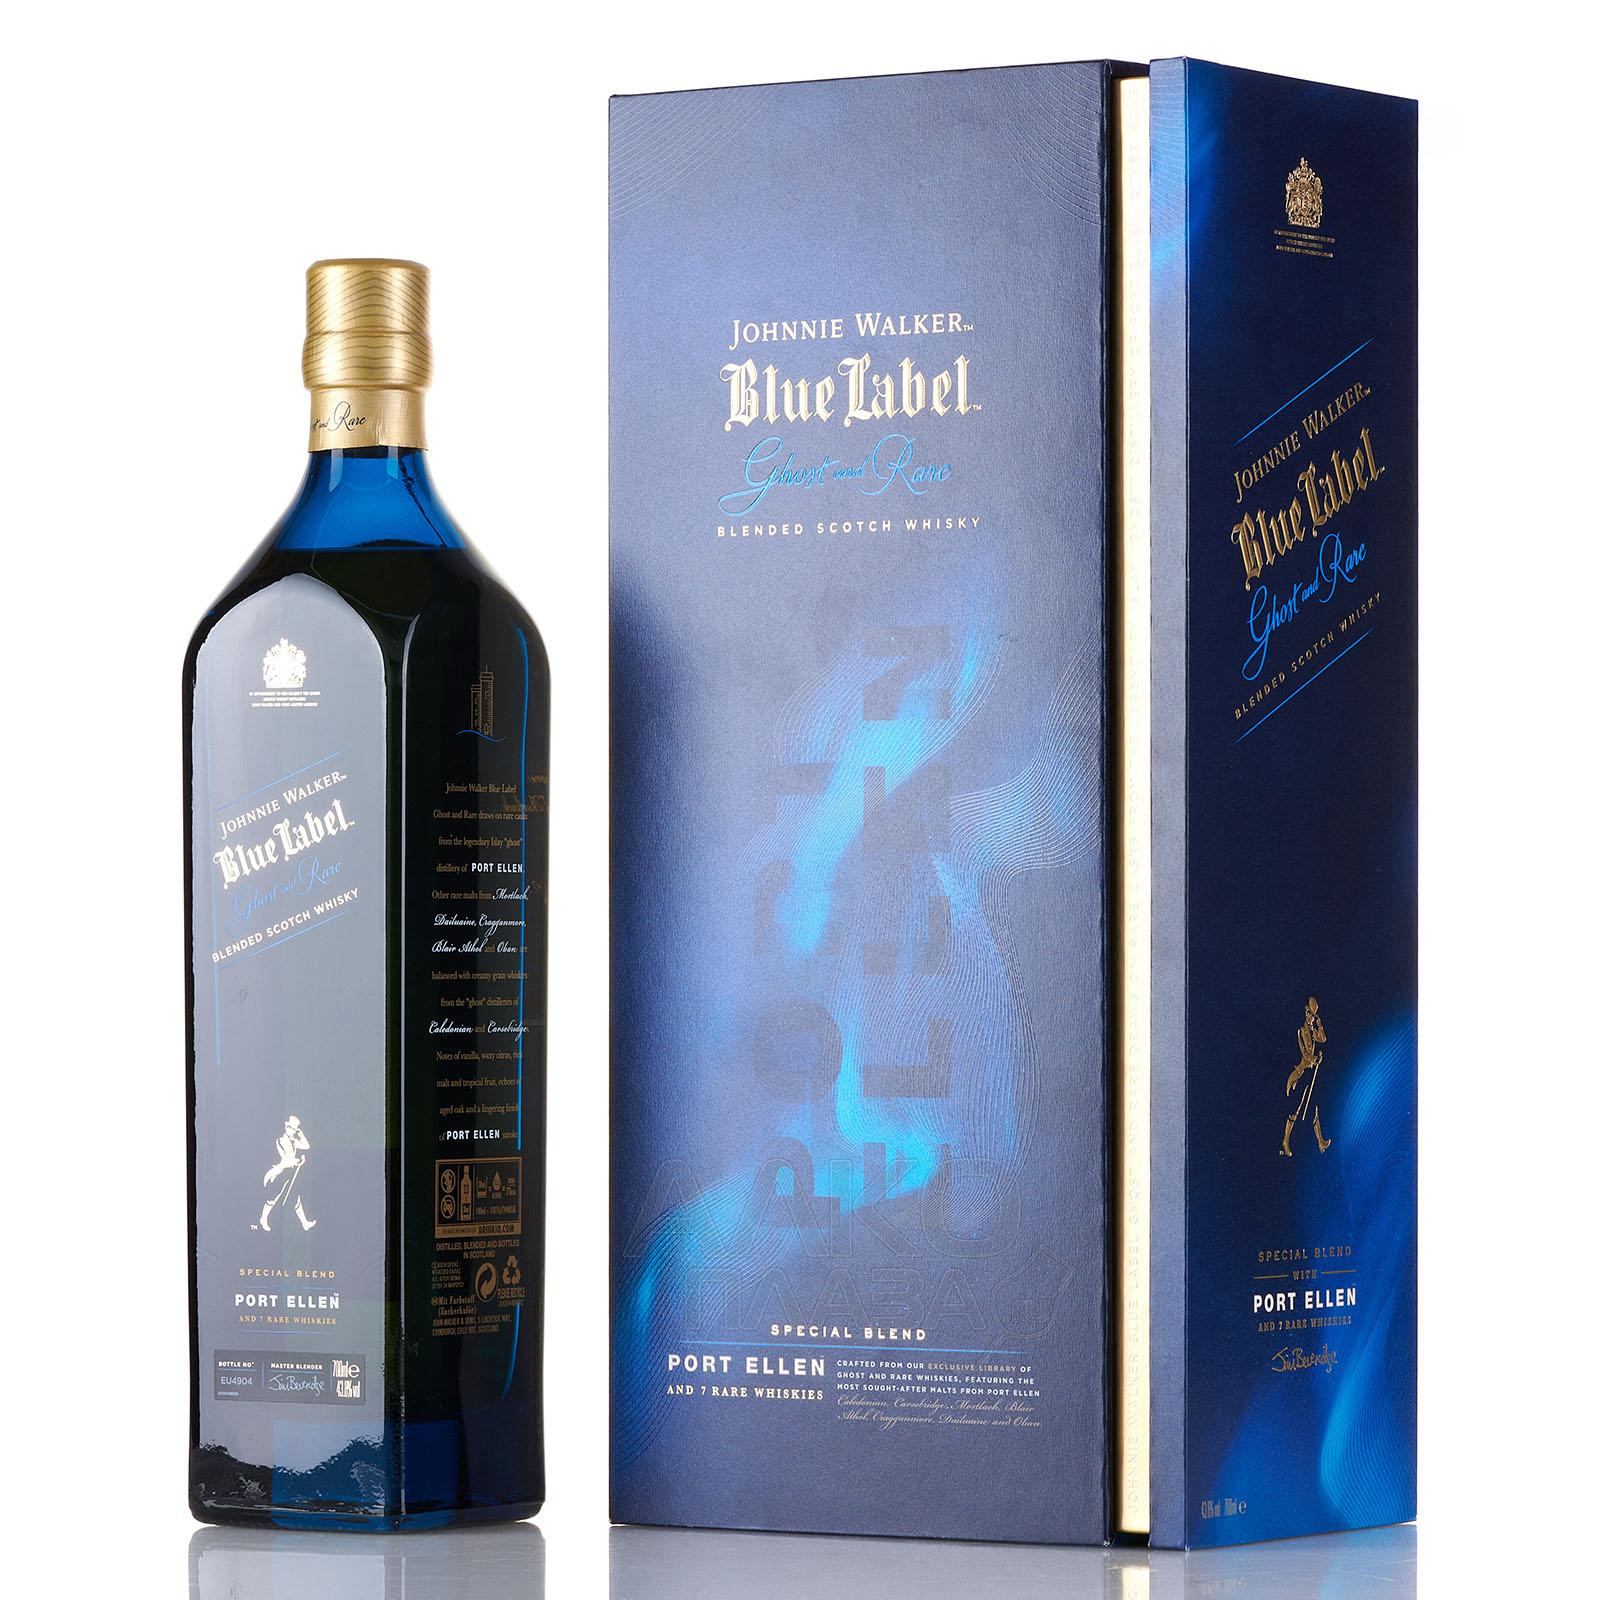 Johnnie walker 0.7. Виски Джонни Уокер Блю лейбл 0.7. Виски Johnnie Walker Blue Label 0,7л.. Johnnie Walker Blue Label Ghost and rare - Pittyvaich. Blue Ghost Label.